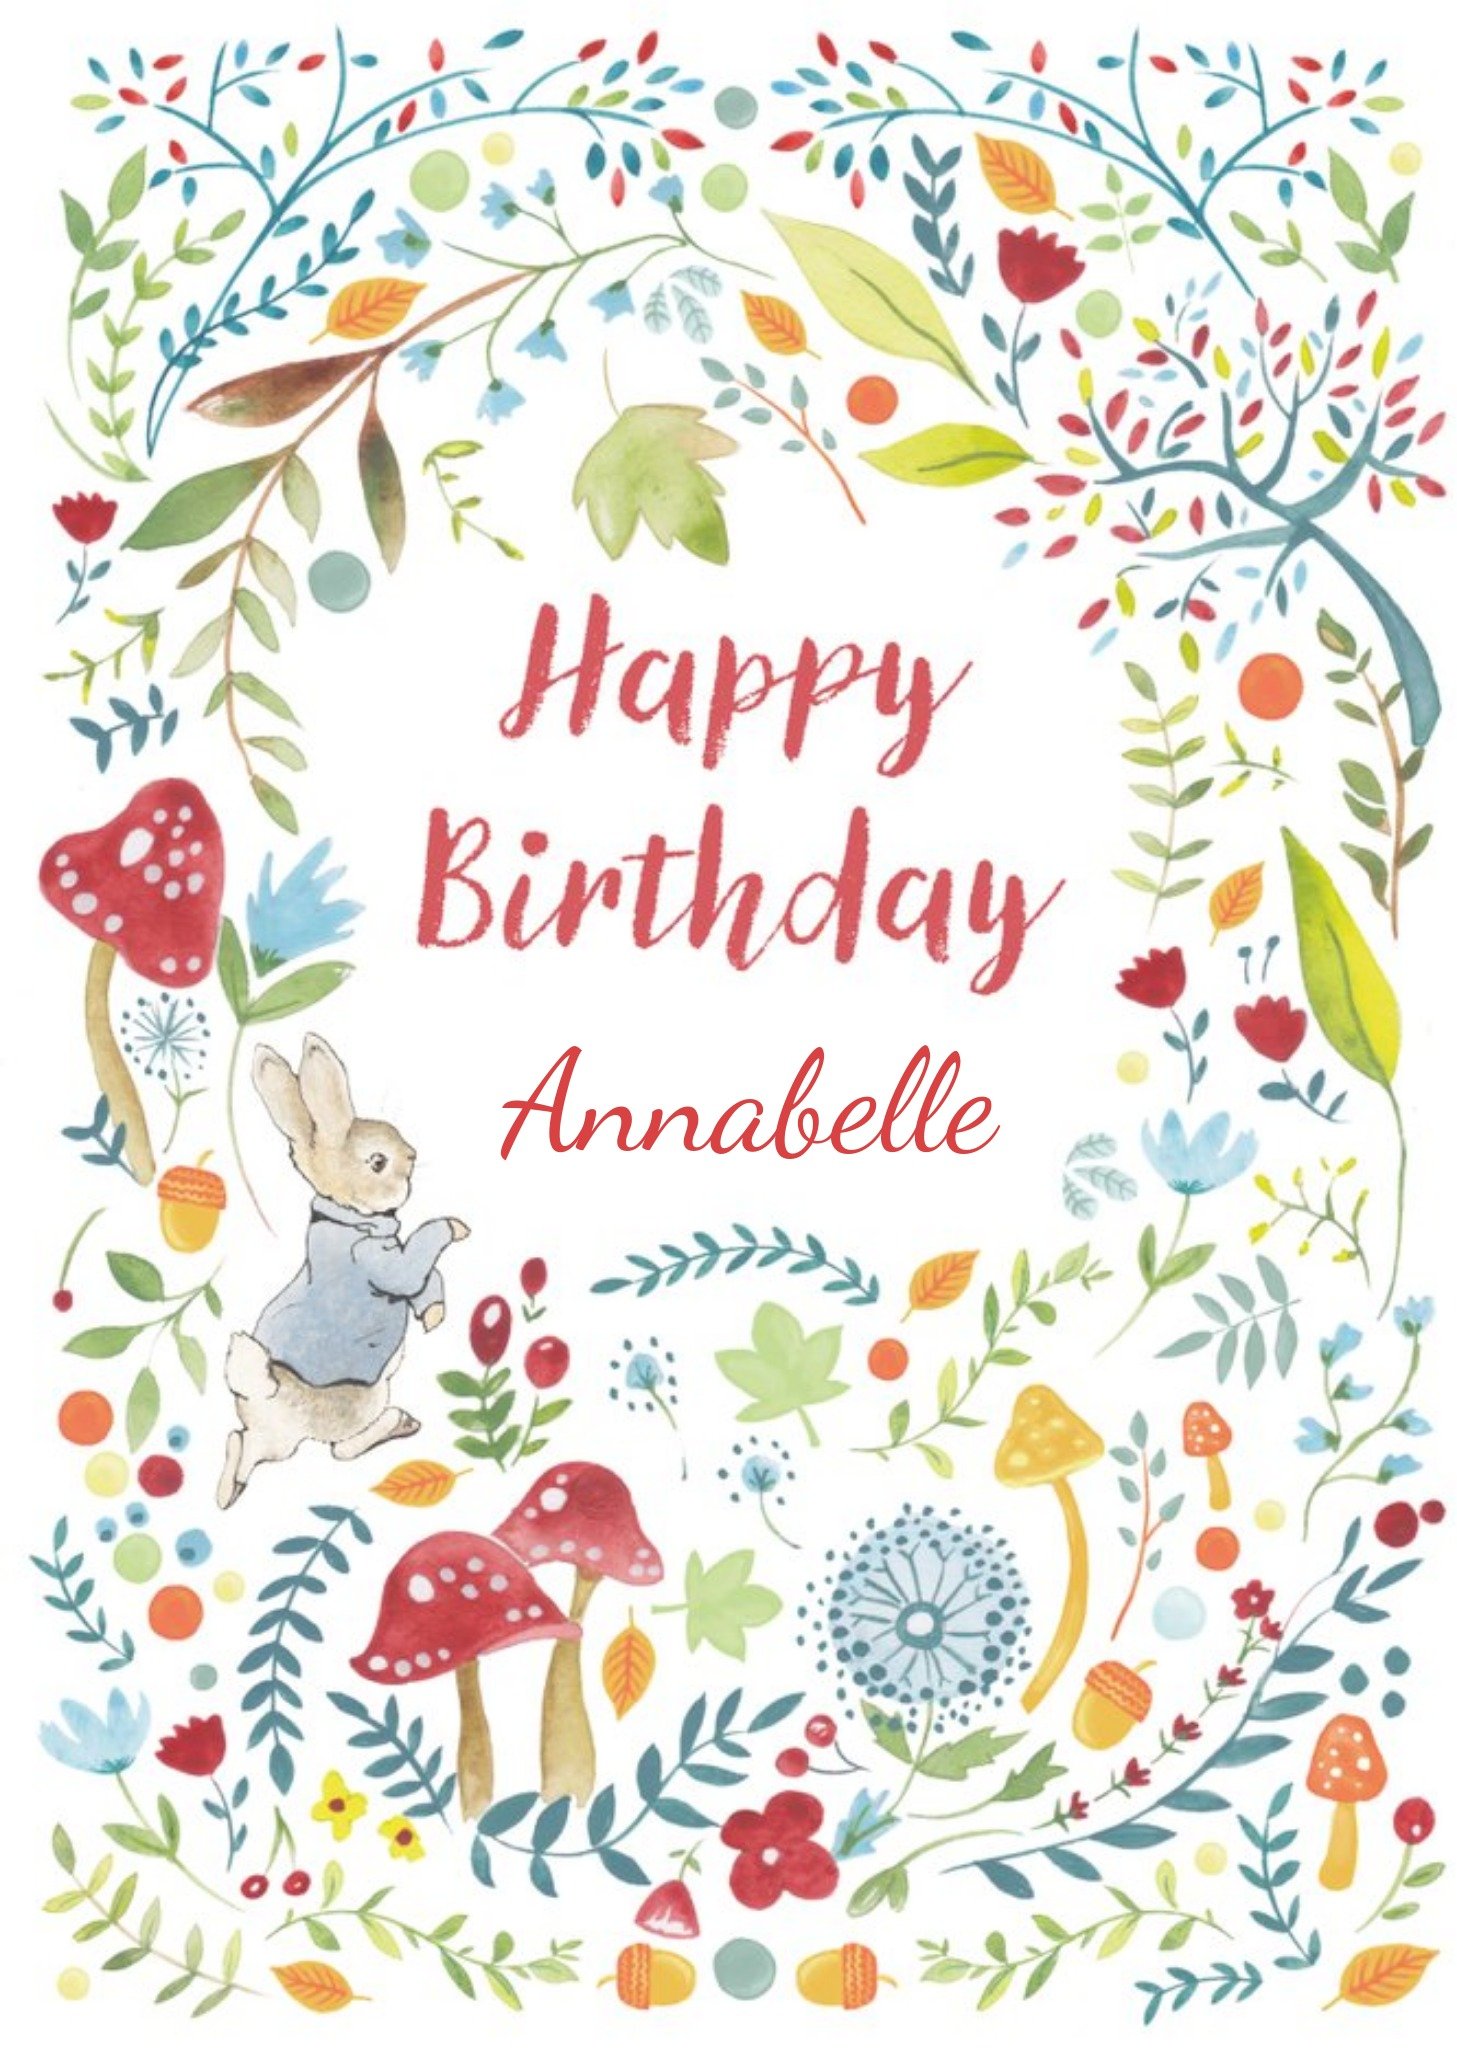 Beatrix Potter Peter Rabbit Flowers Trees Mushrooms Leaves Happy Birthday Card Ecard